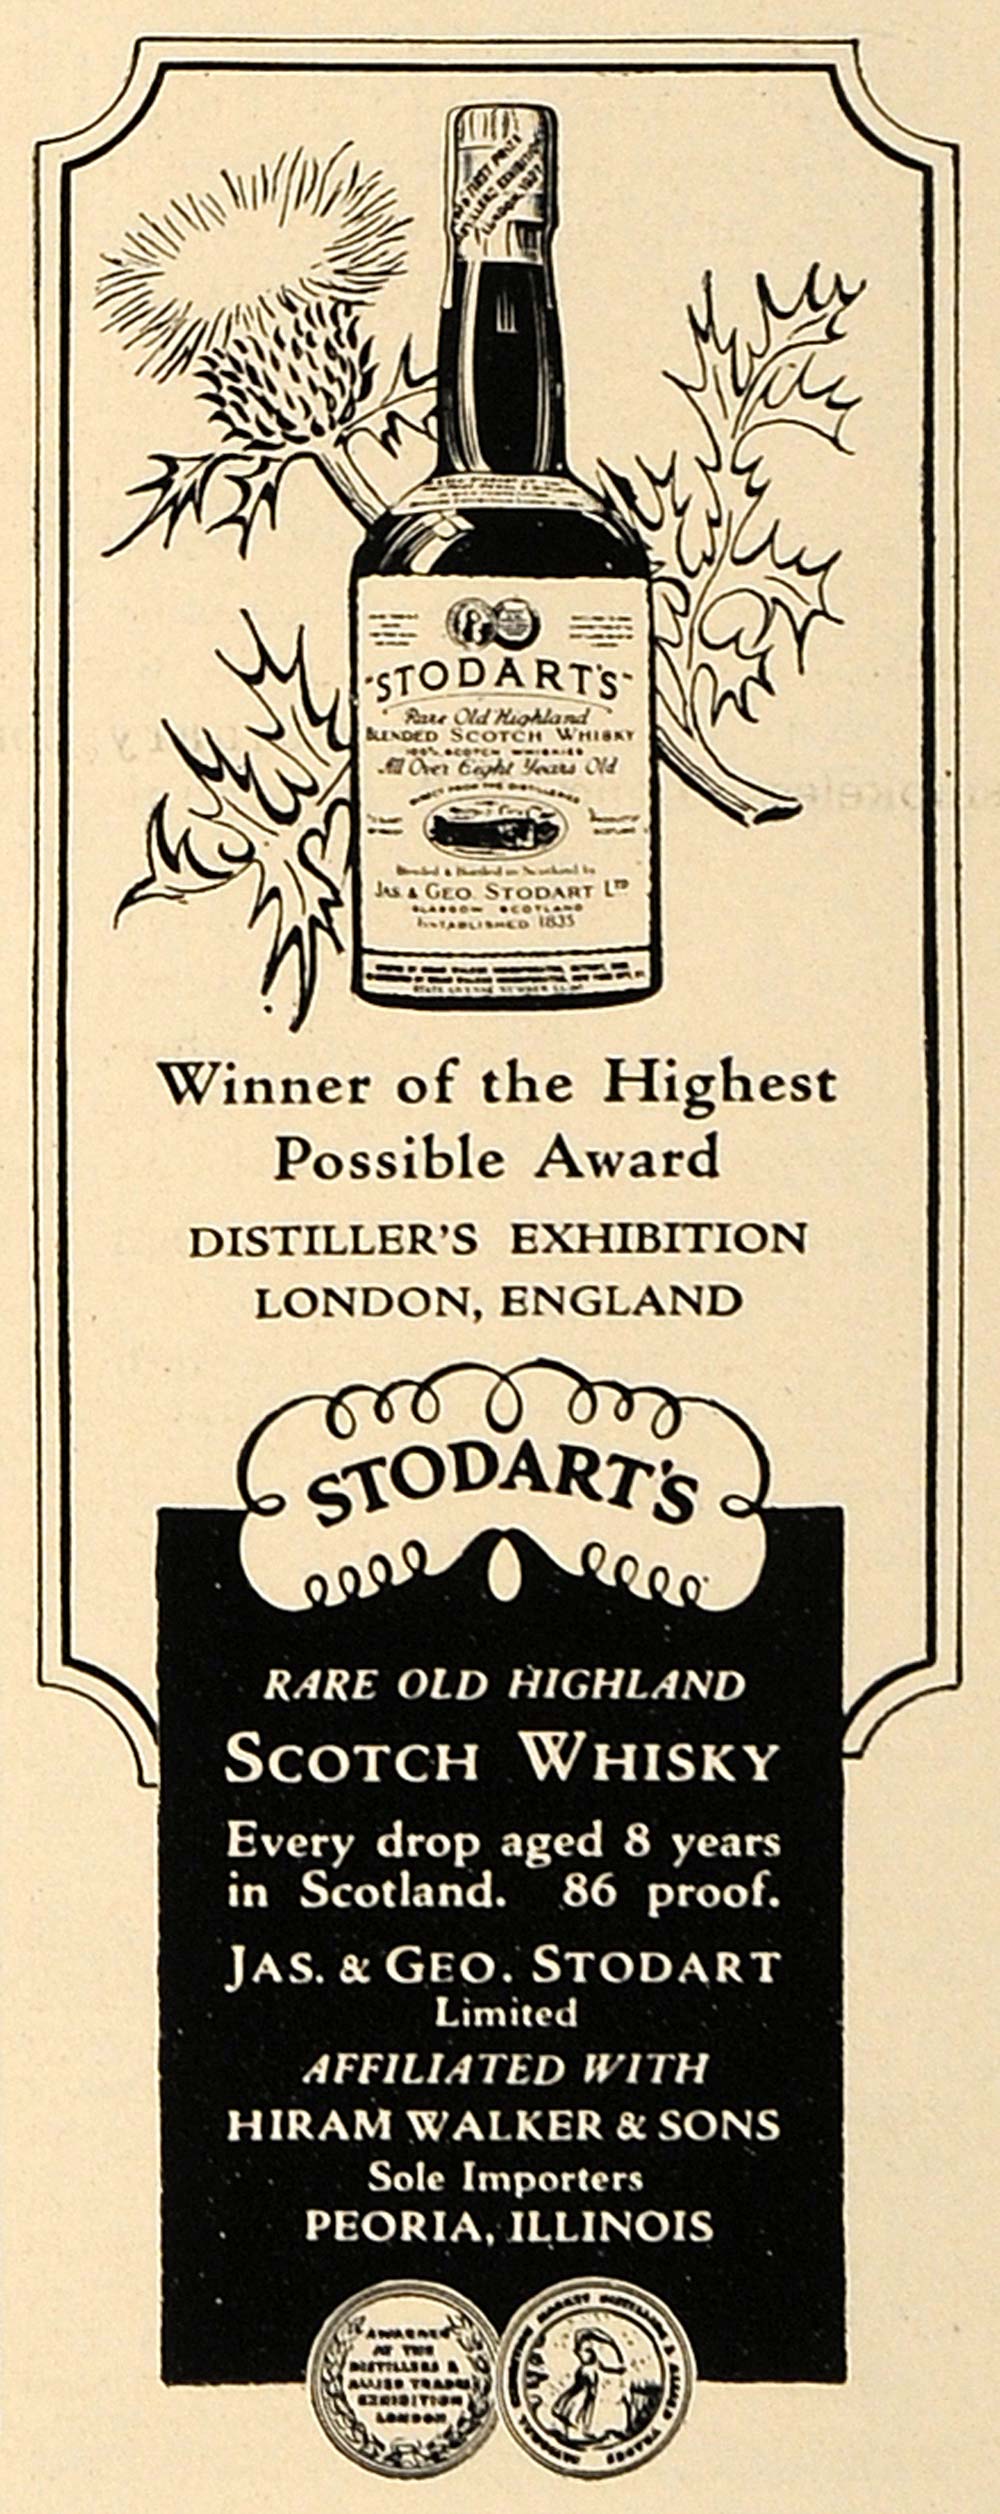 1936 Ad Jas. Geo. Stodart's Highland Scotch Whisky - ORIGINAL ADVERTISING ESQ1